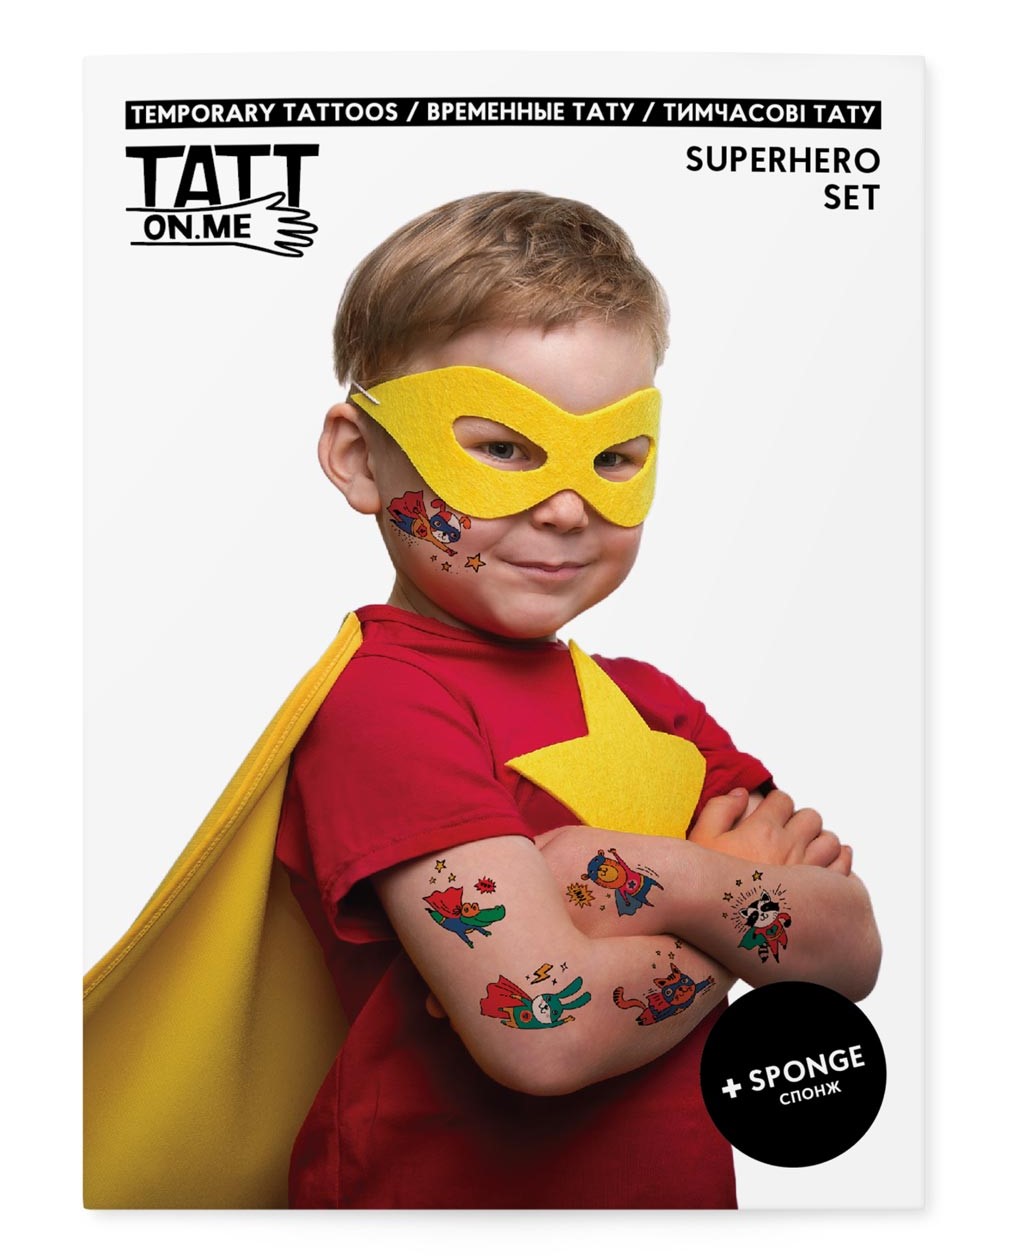 Tatuaje temporare - Superhero | Tatton.me